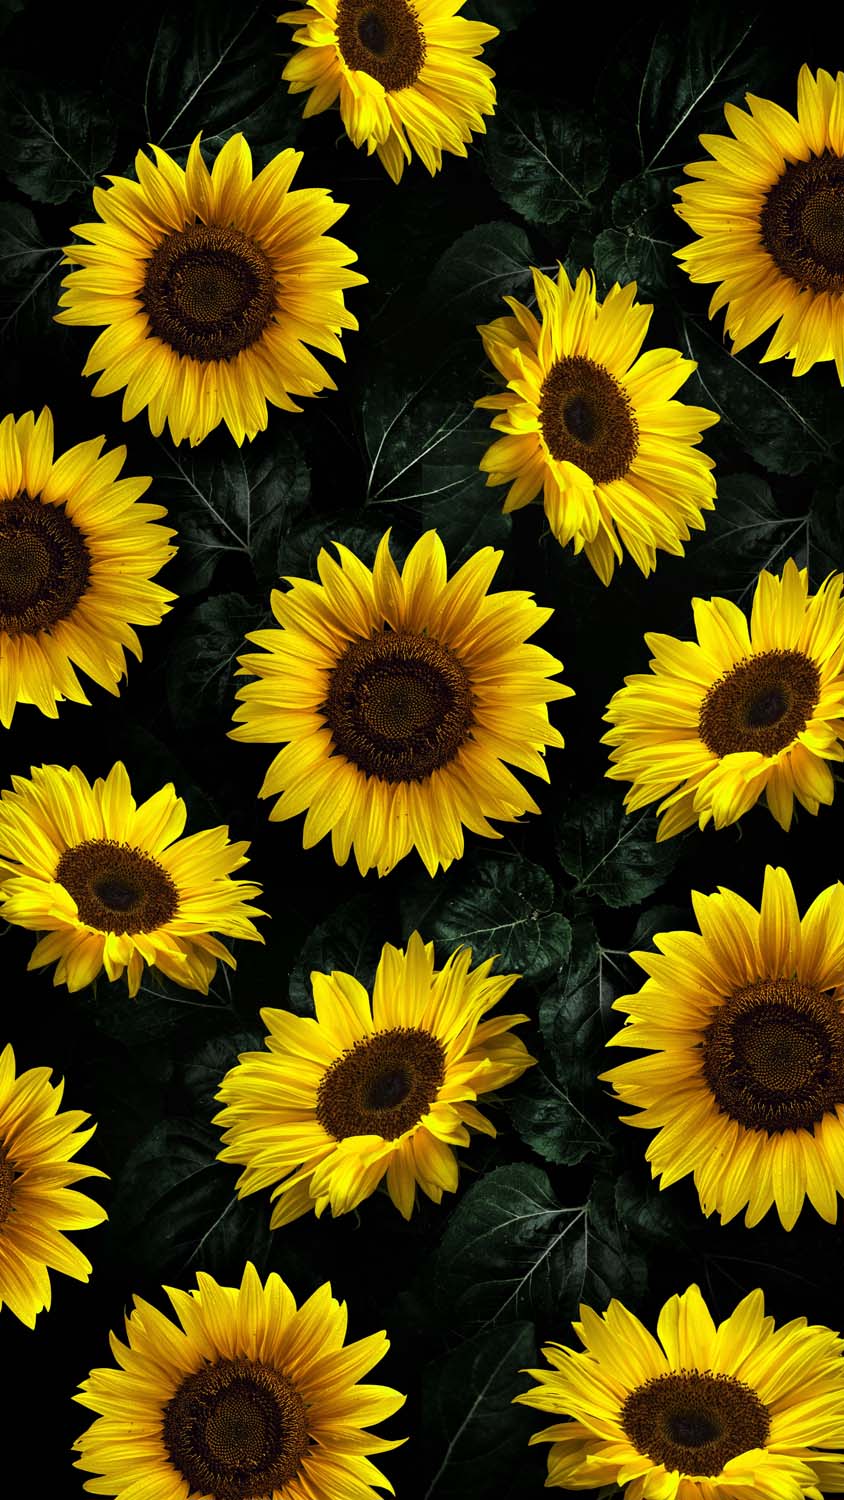 Sunflowers IPhone Wallpaper HD - IPhone Wallpapers : iPhone Wallpapers